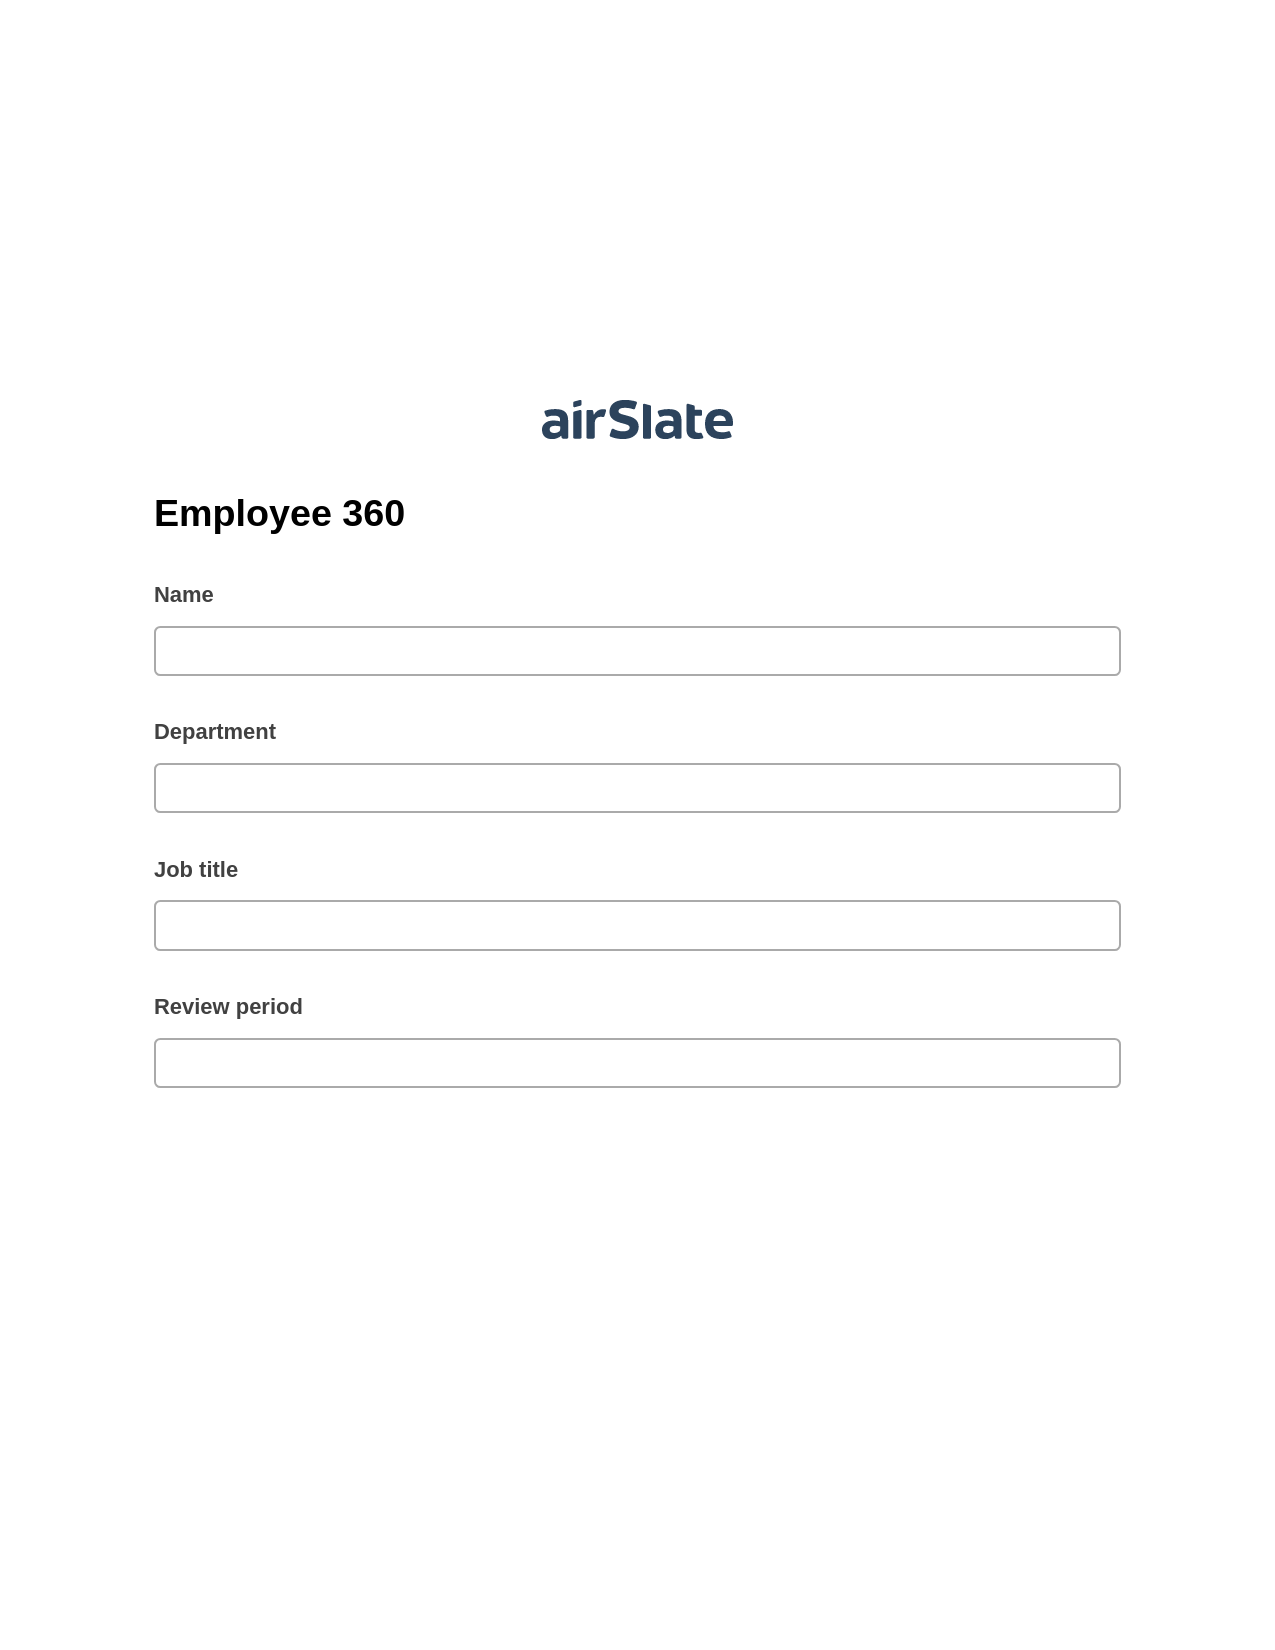 Multirole Employee 360 Pre-fill from MS Dynamics 365 Records, Invoke Salesforce Process Bot, Export to Smartsheet